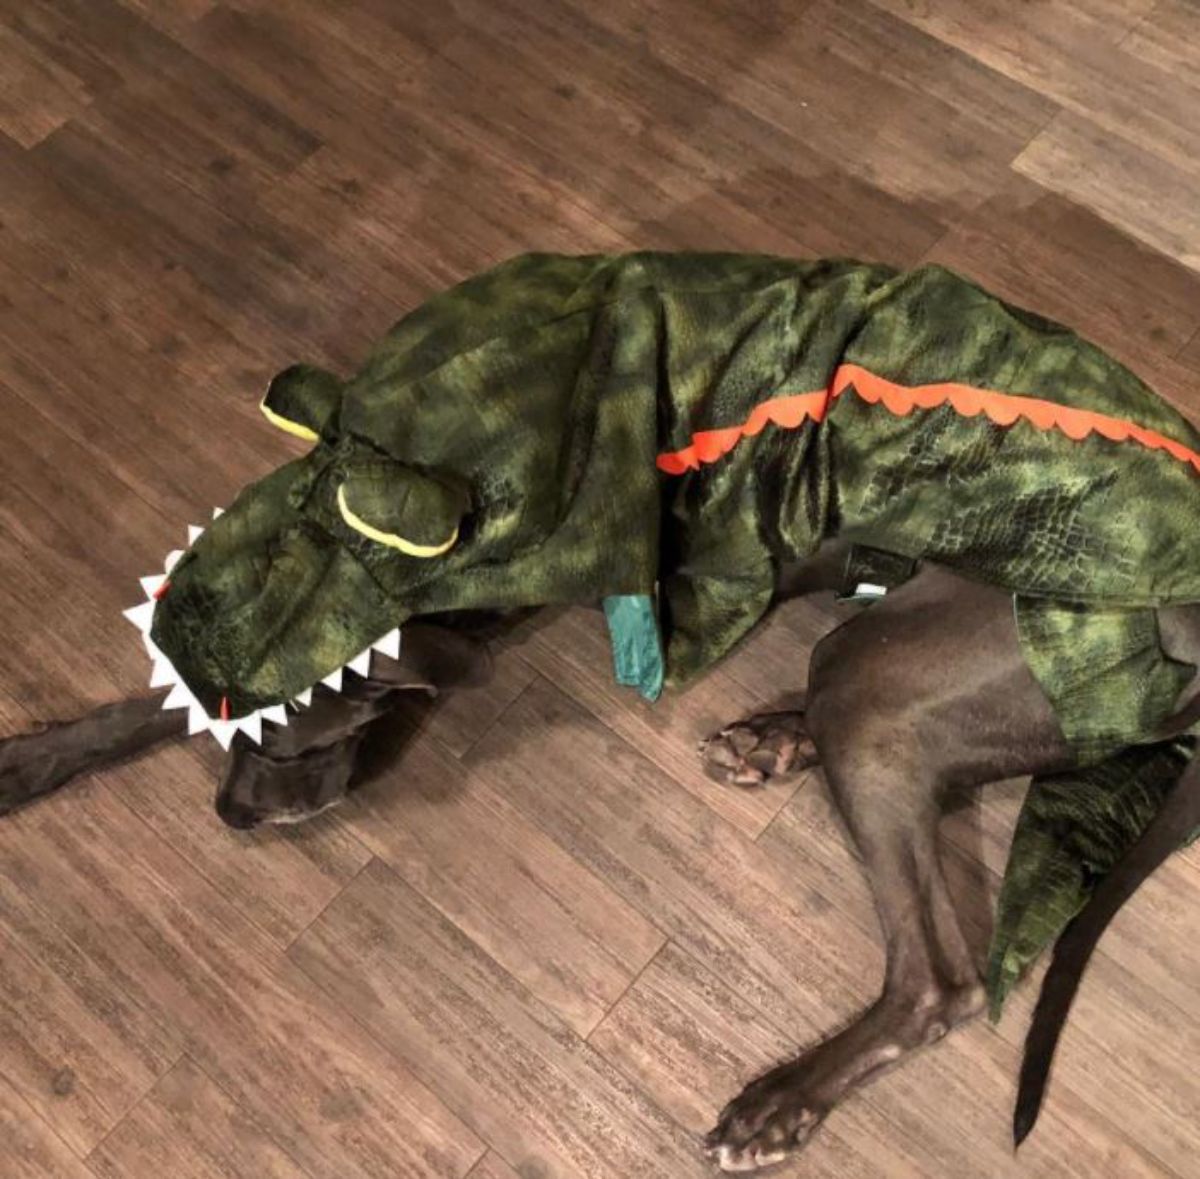 Great Dane lying on the floor in its dinosaur costume